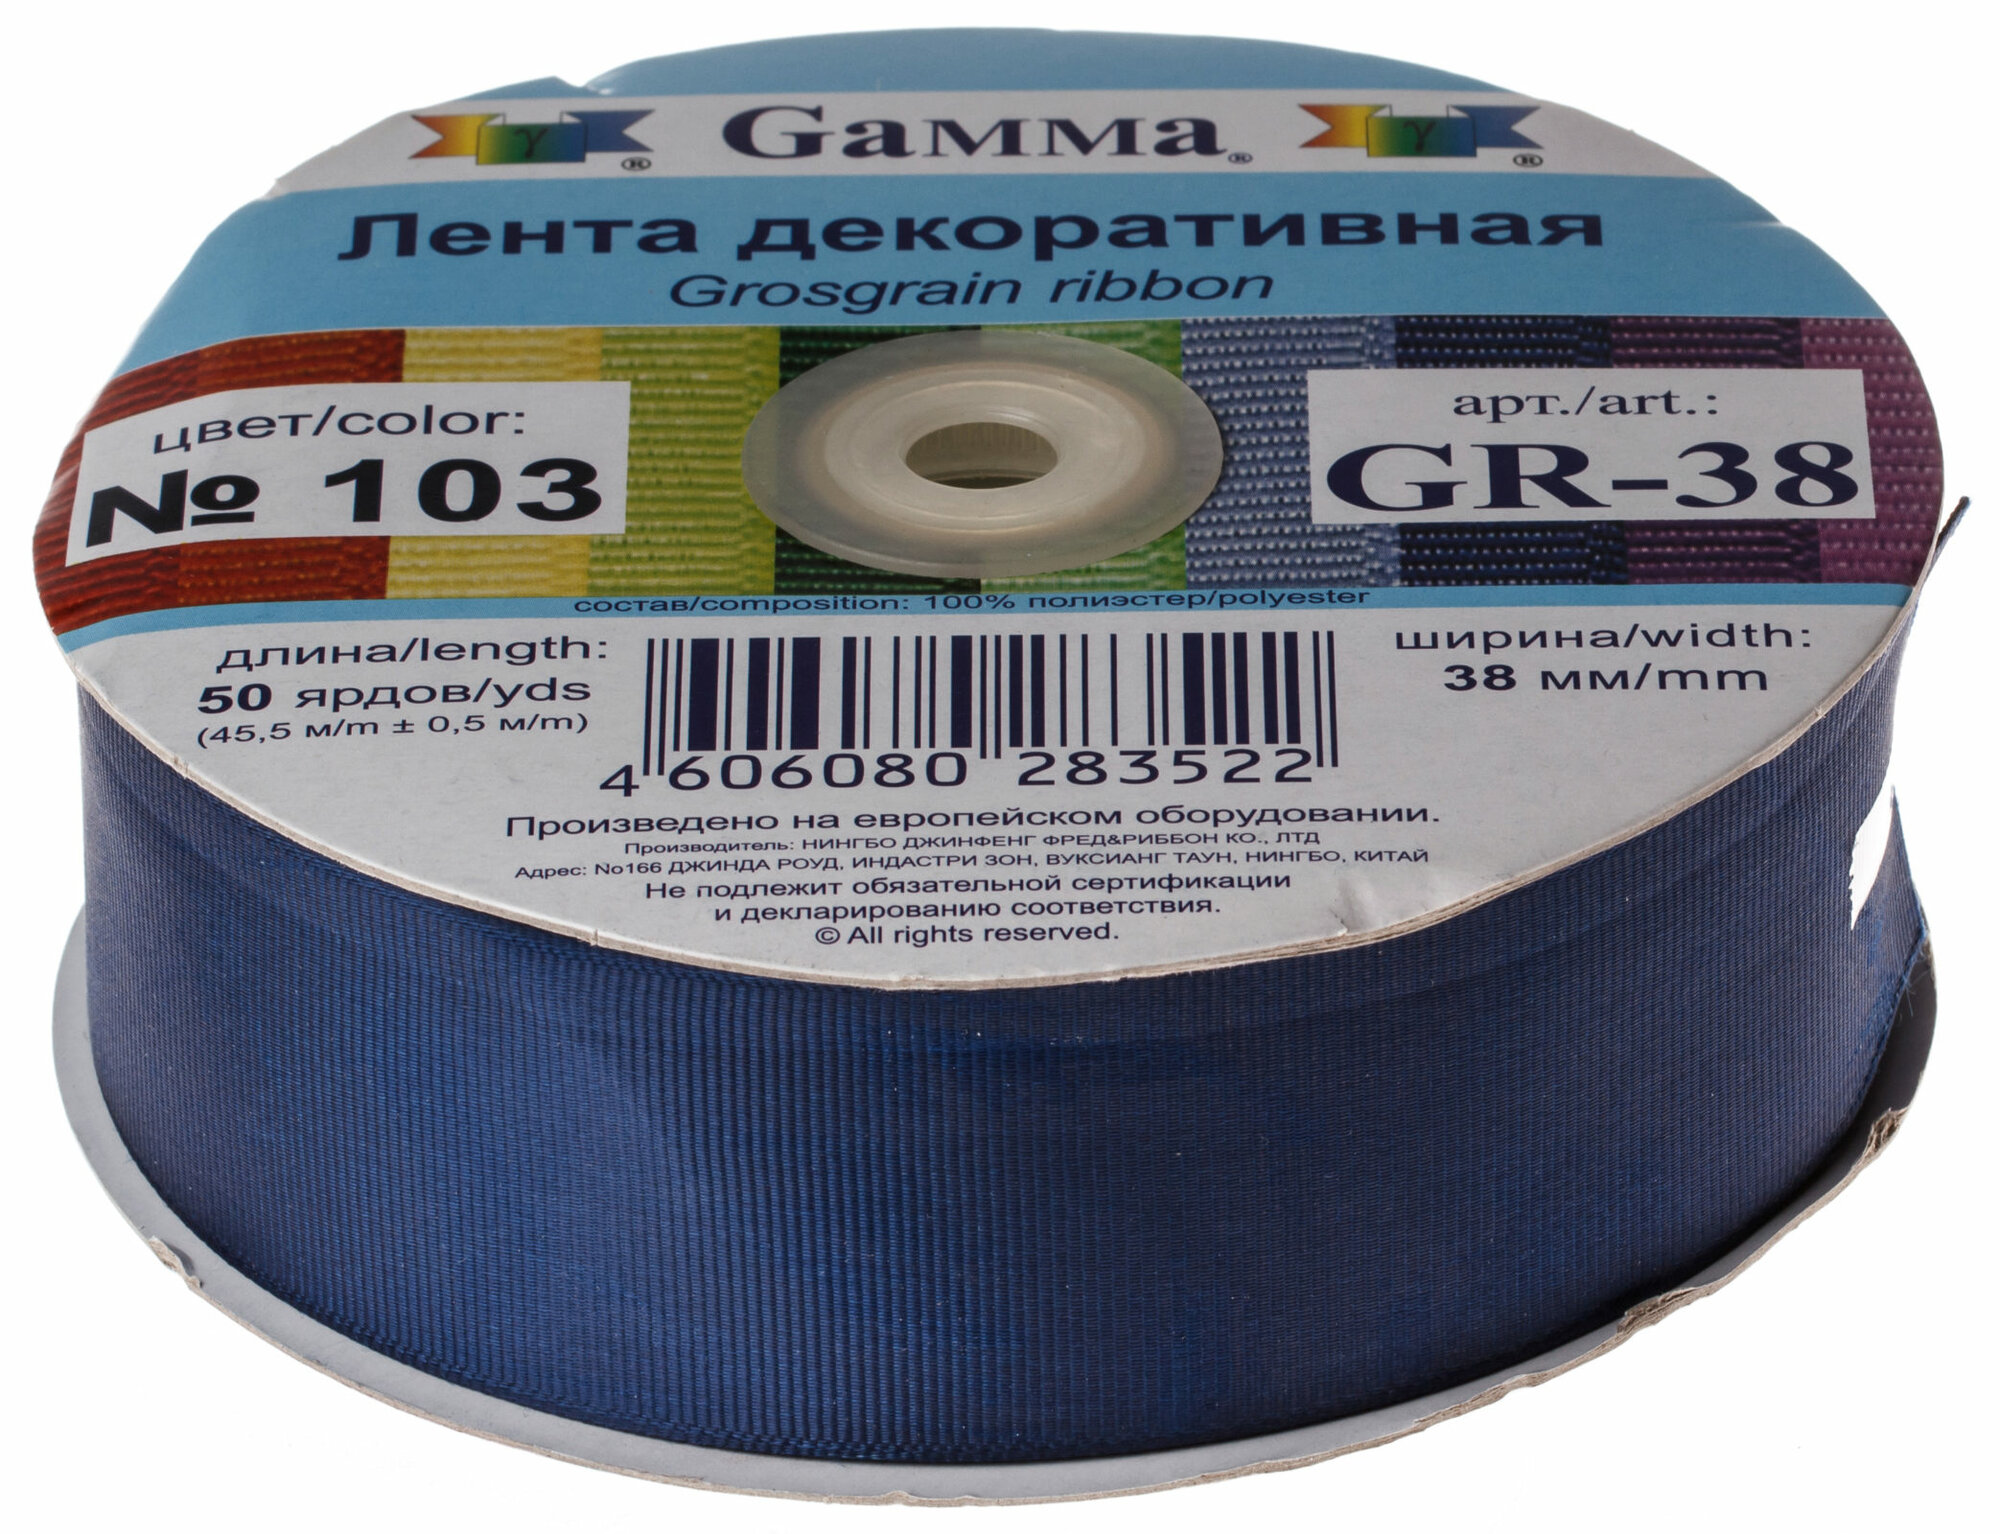 Тесьма GAMMA репсовая, темно-синий (103), 38мм, 1м, 1шт